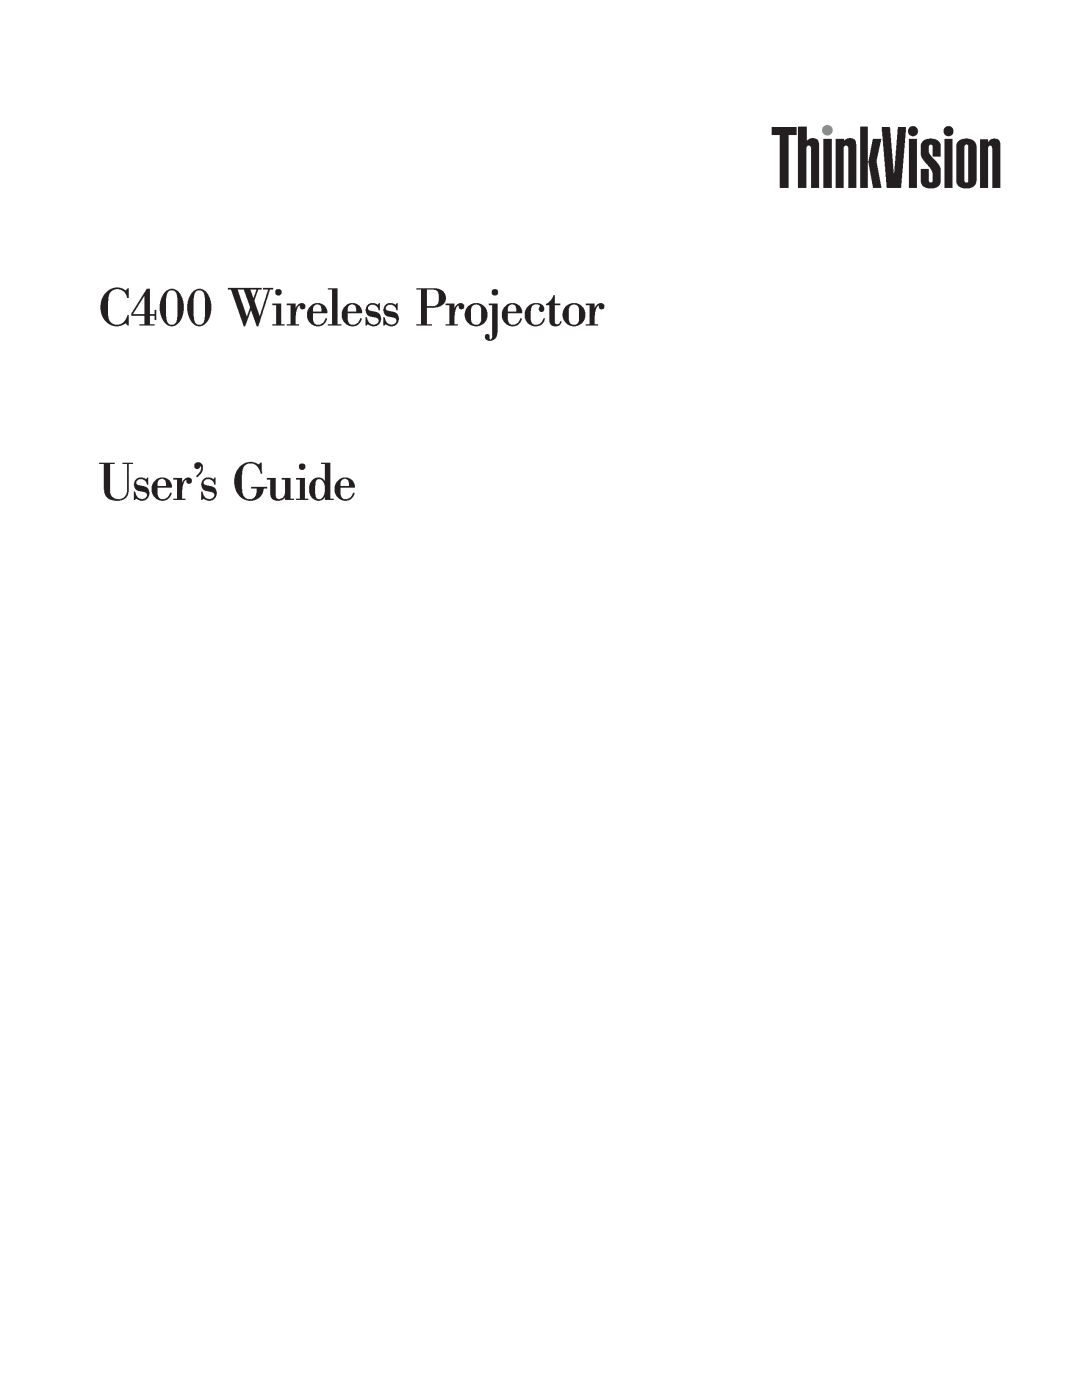 Lenovo manual C400 Wireless Projector User’s Guide 